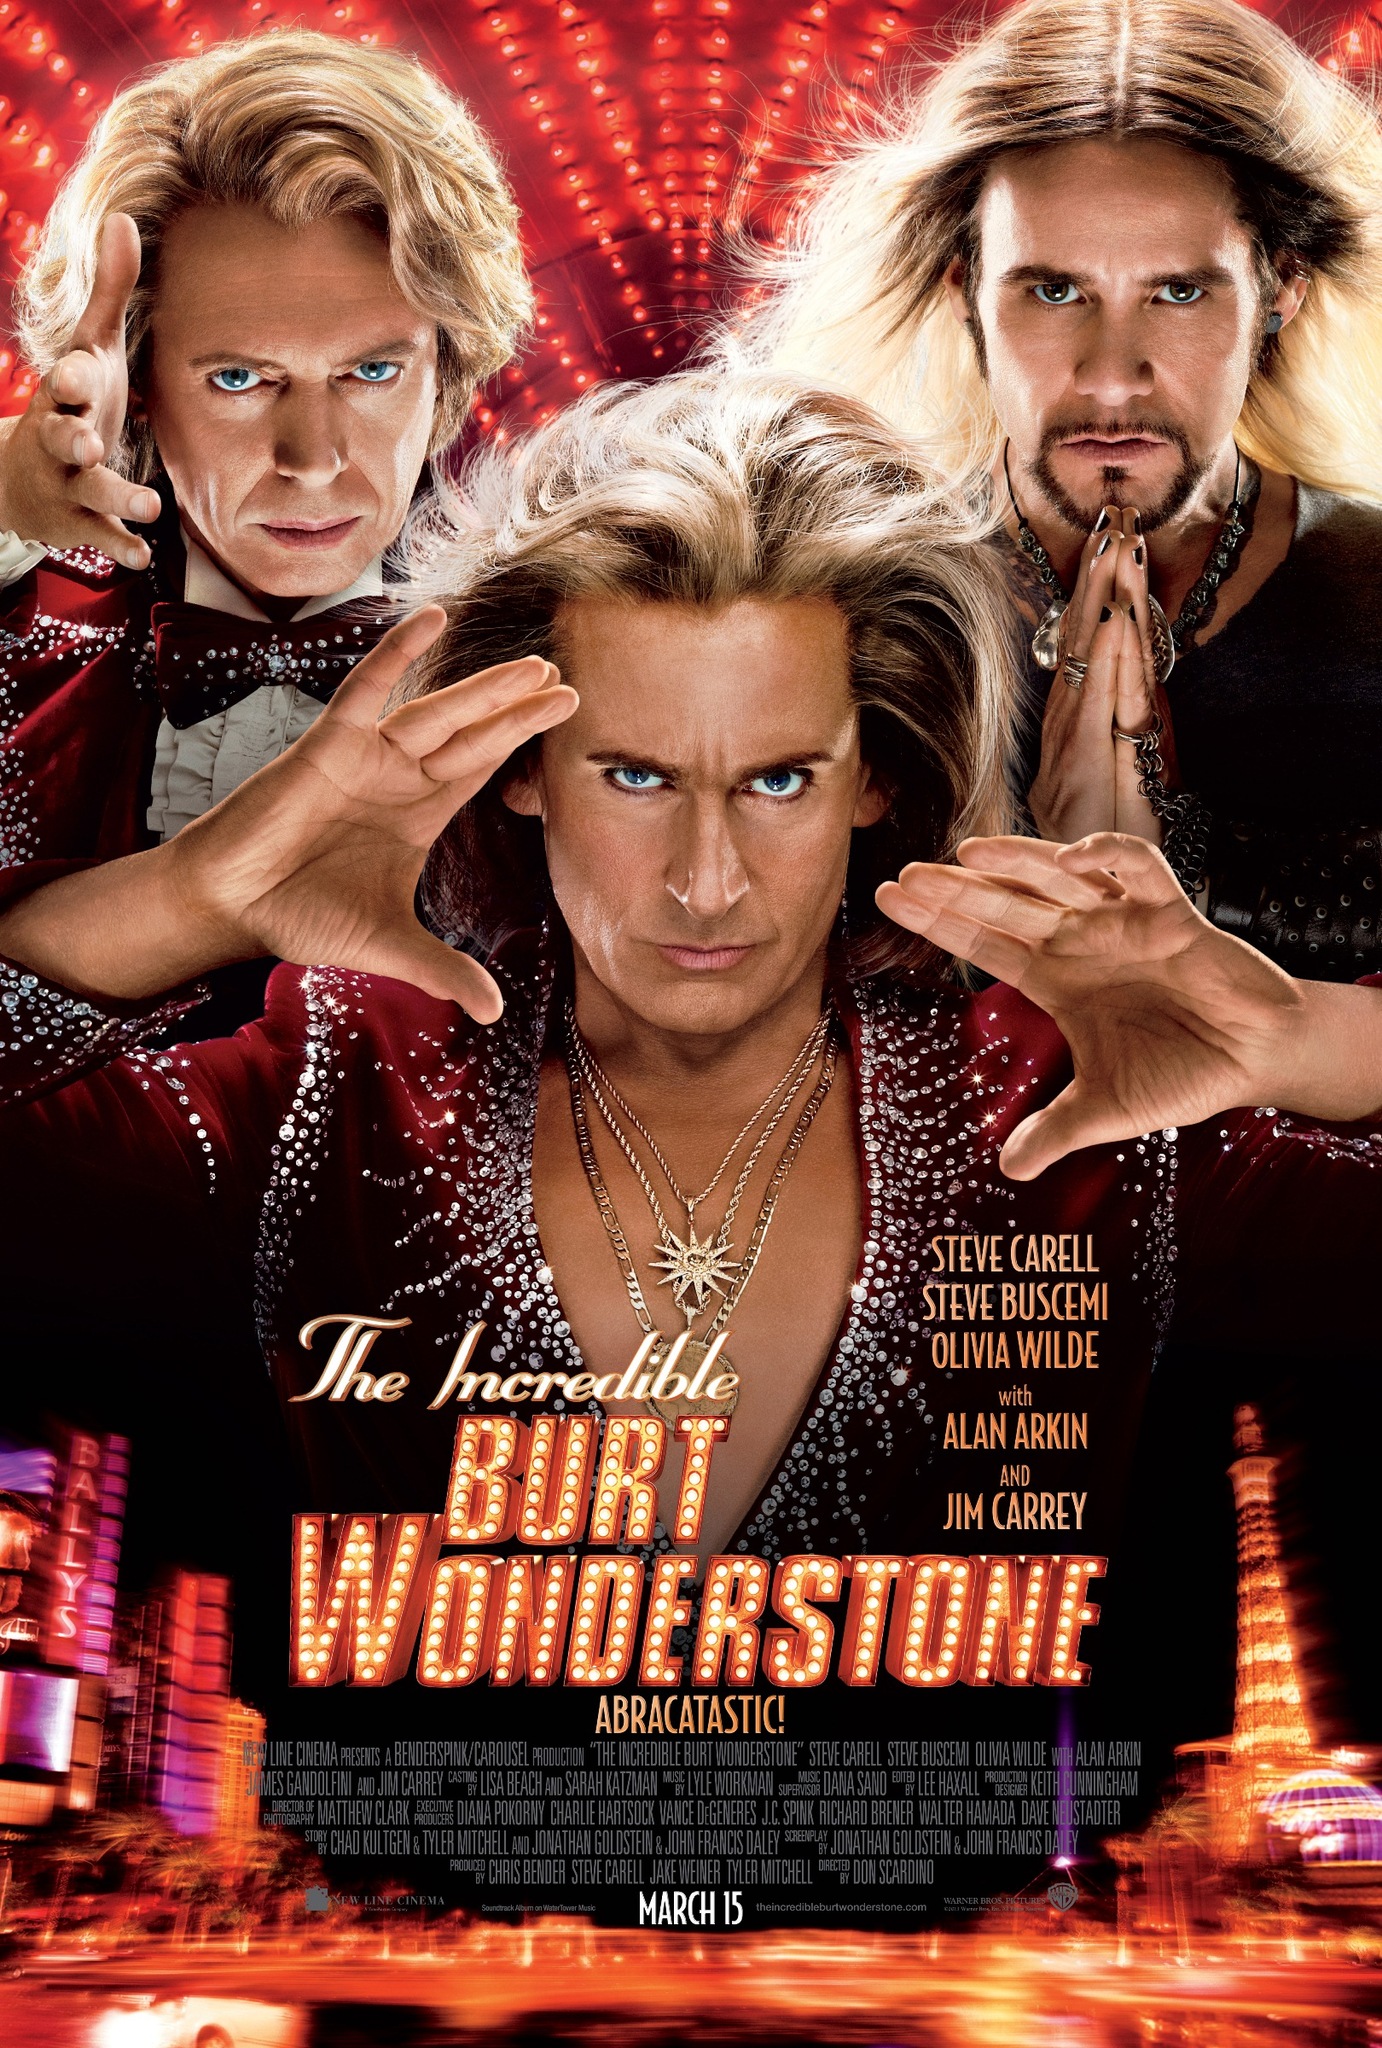 The Incredible Burt Wonderstone (2013) ศึกยอดมายากลคนบ๊องบันลือโลก Steve Carell